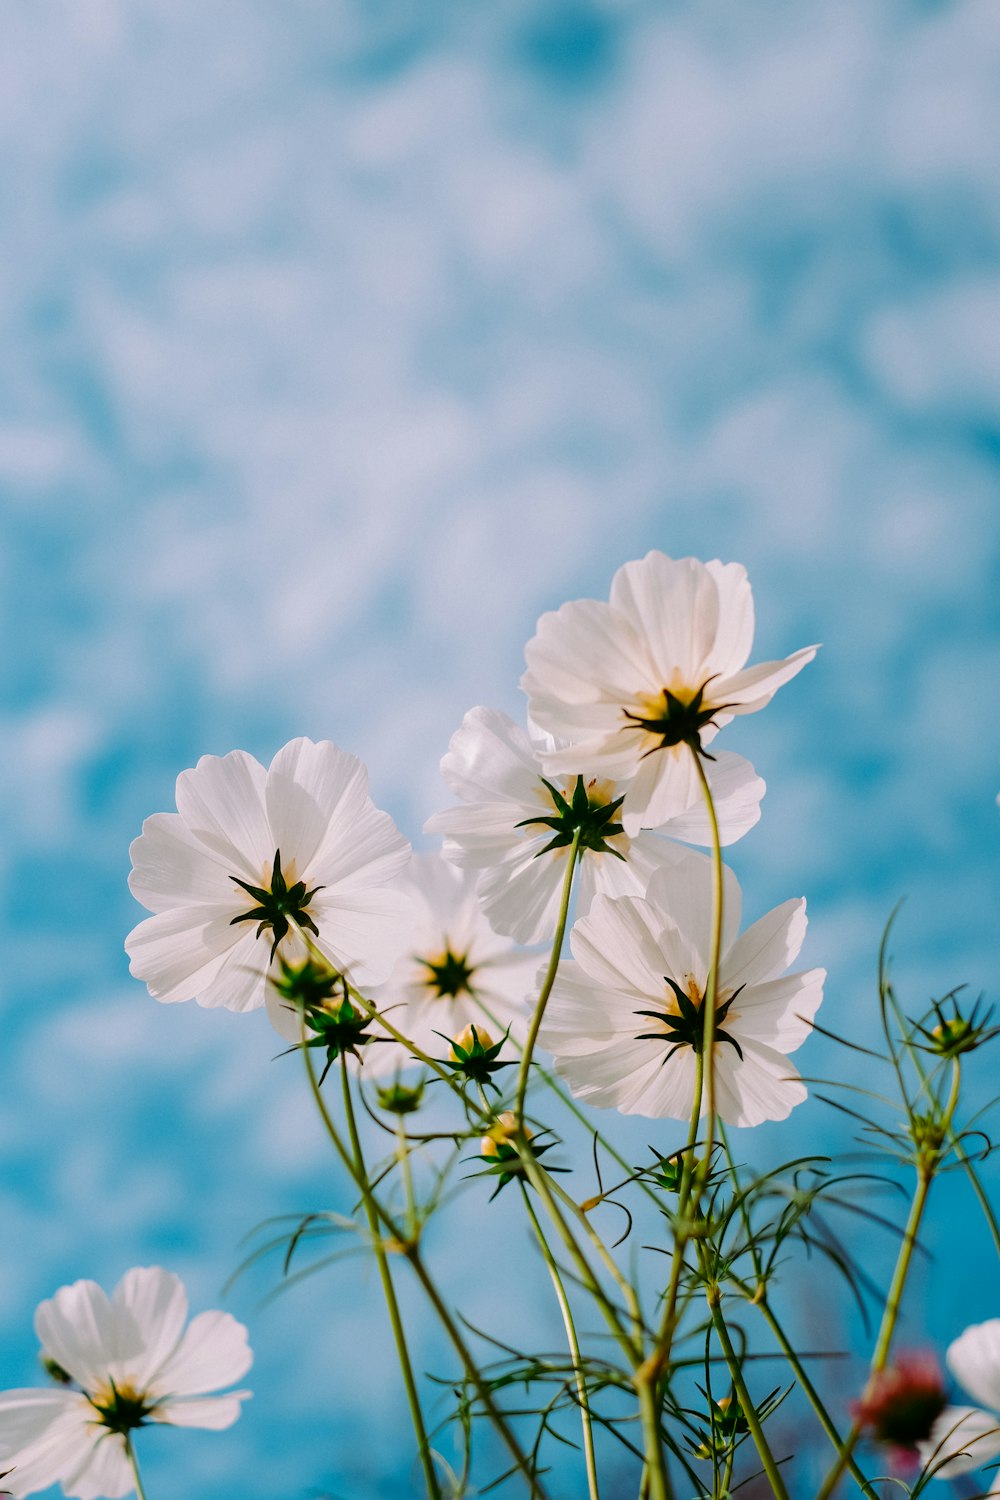 White petaled flowers during day photo – Free Flower Image on Unsplash